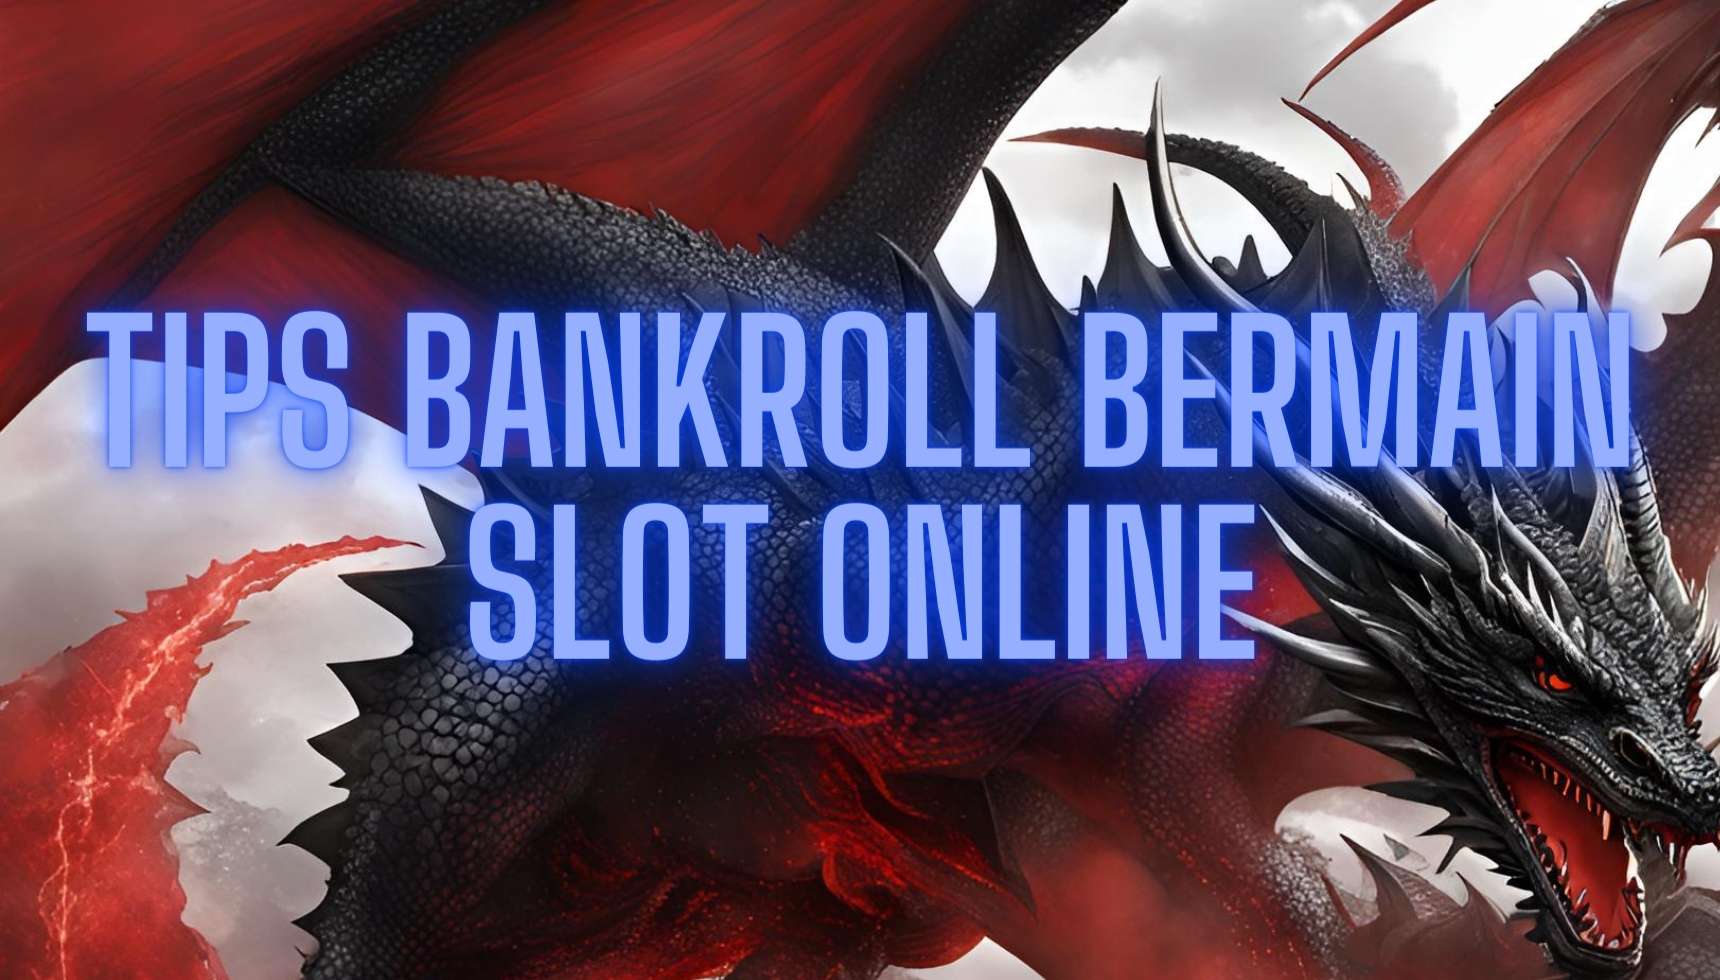 Tips Bankroll Bermain Slot Online